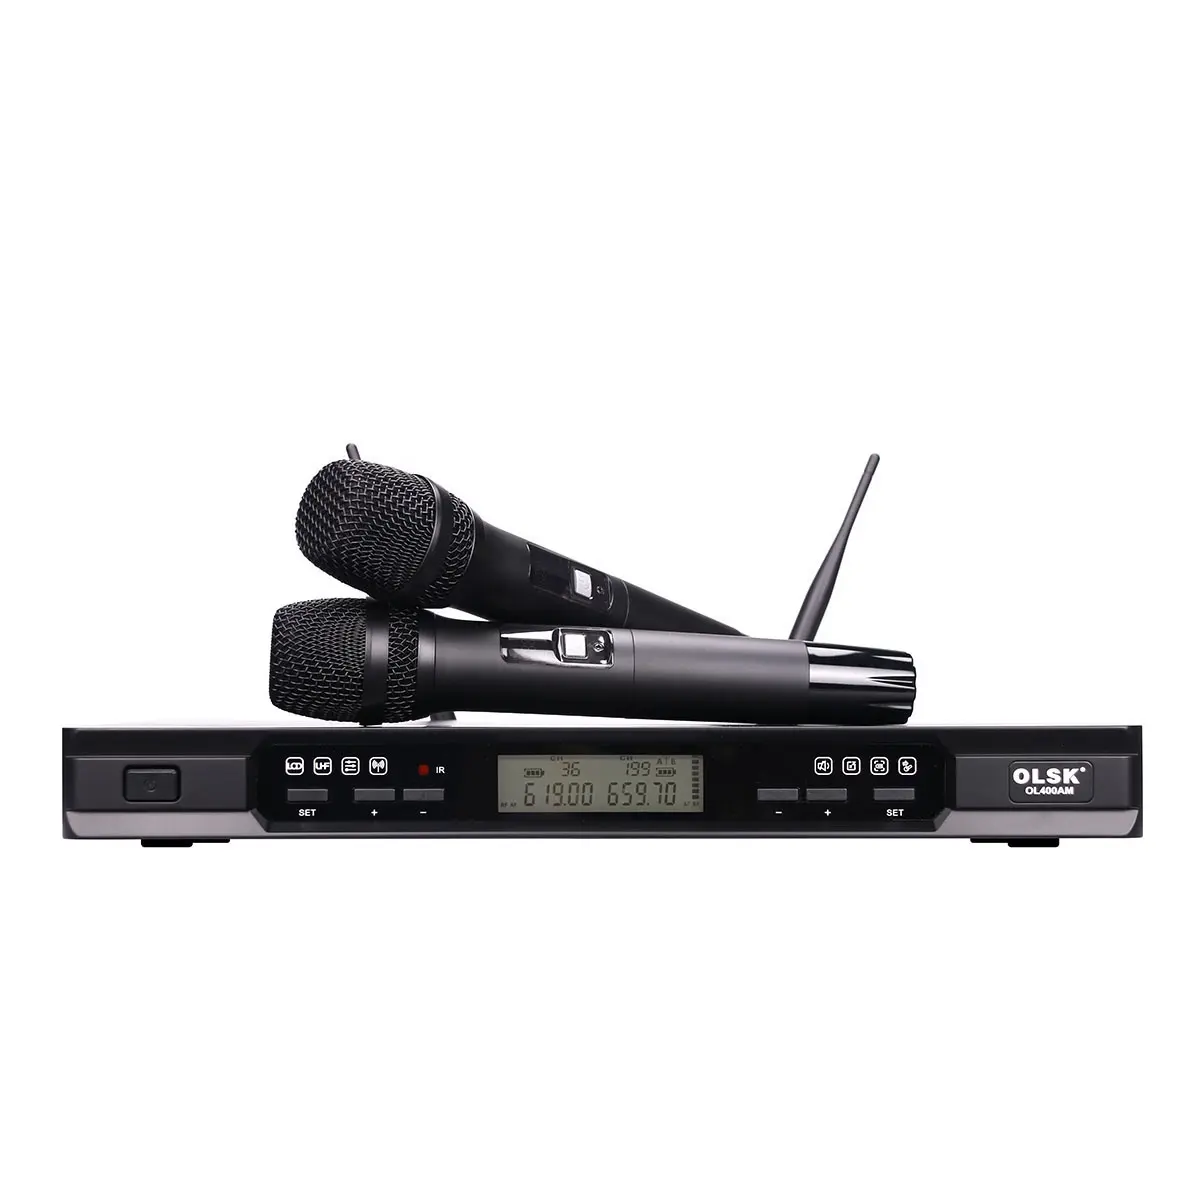 Ol400am microfone karaokê de canal duplo, alcance de 160 metros, dinâmico, uhf, sistema de microfone sem fio com microfone portátil, 6.3mm lxr jack